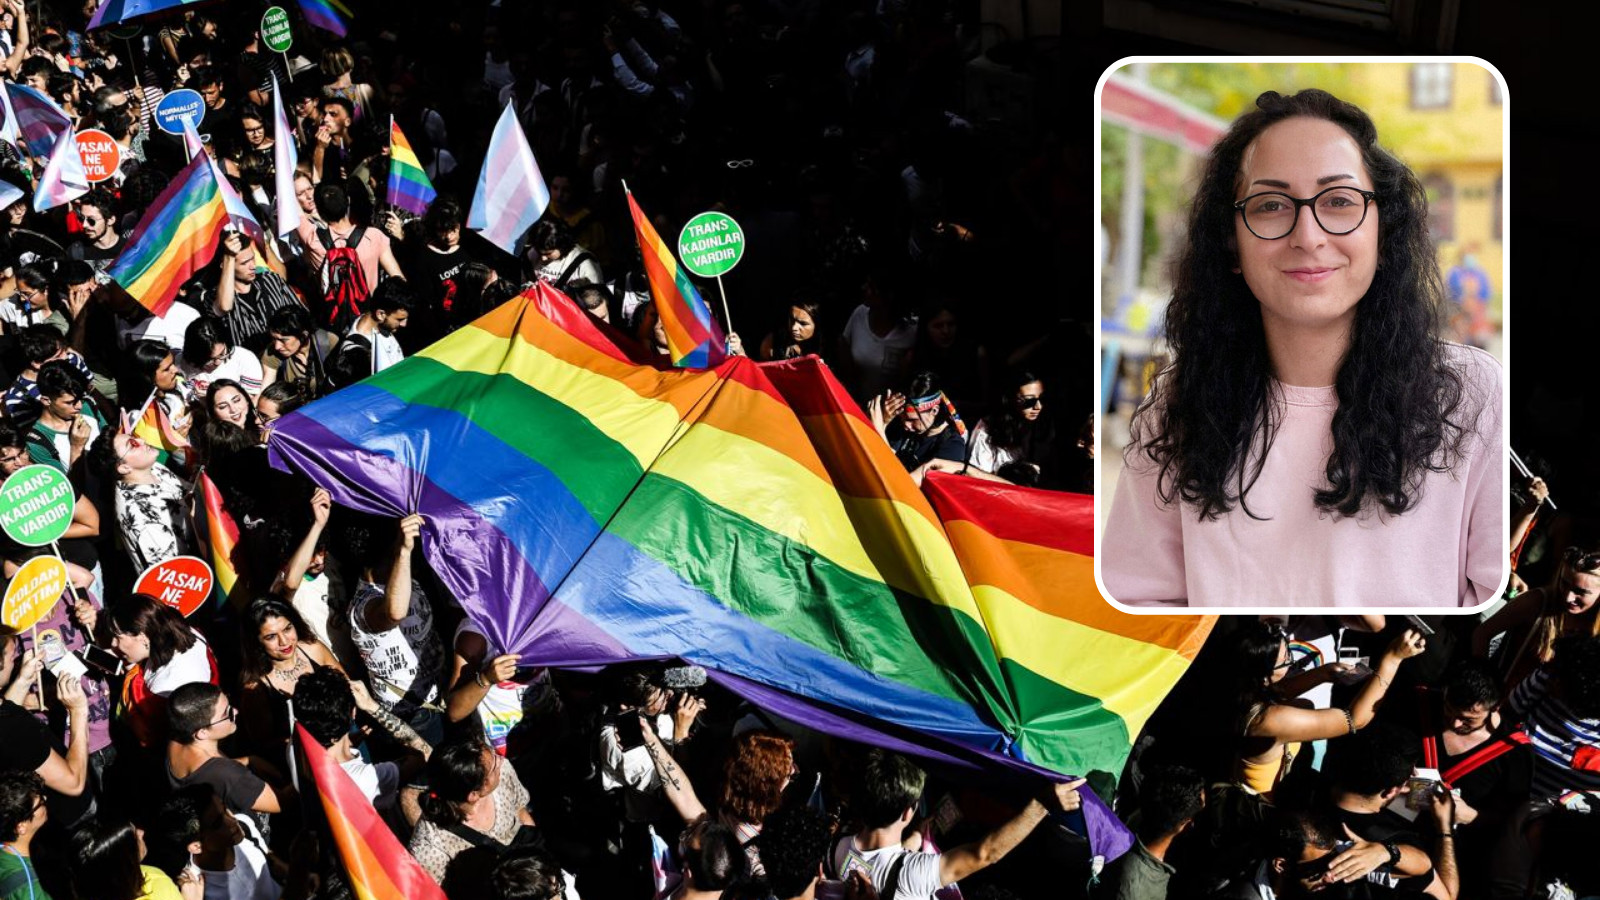 “17 Mayıs bizim haklılığımızın günü, kutlu olsun!” Kaos GL - LGBTİ+ Haber Portalı